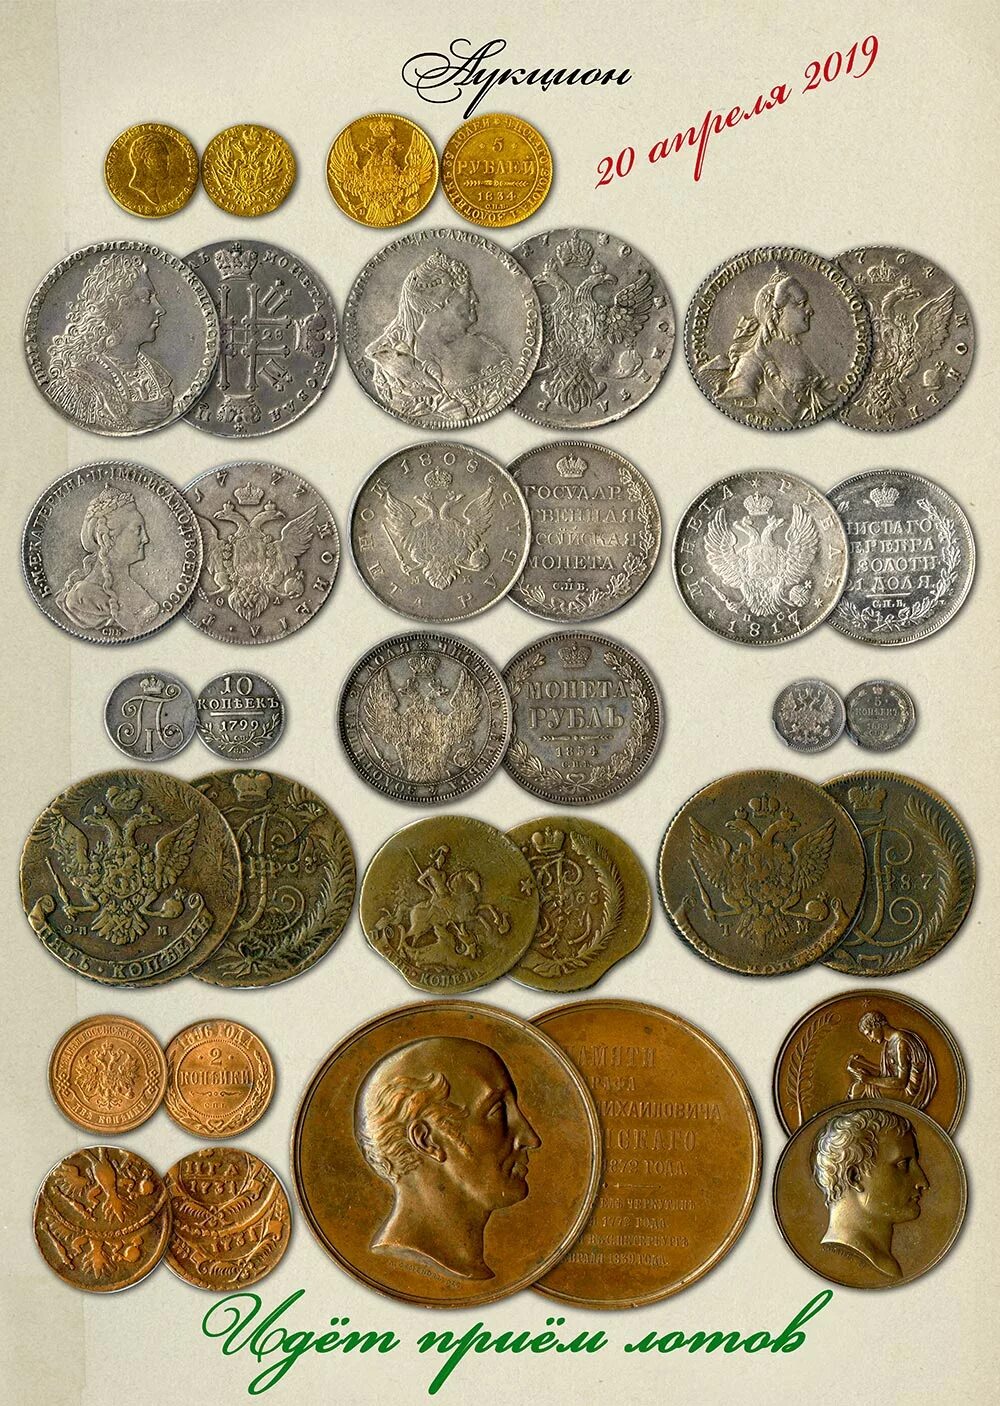 Конрос аукцион монет. Редкие монеты. Аукцион старинных монет. Редкие старинные монеты. Аукционы монет в россии